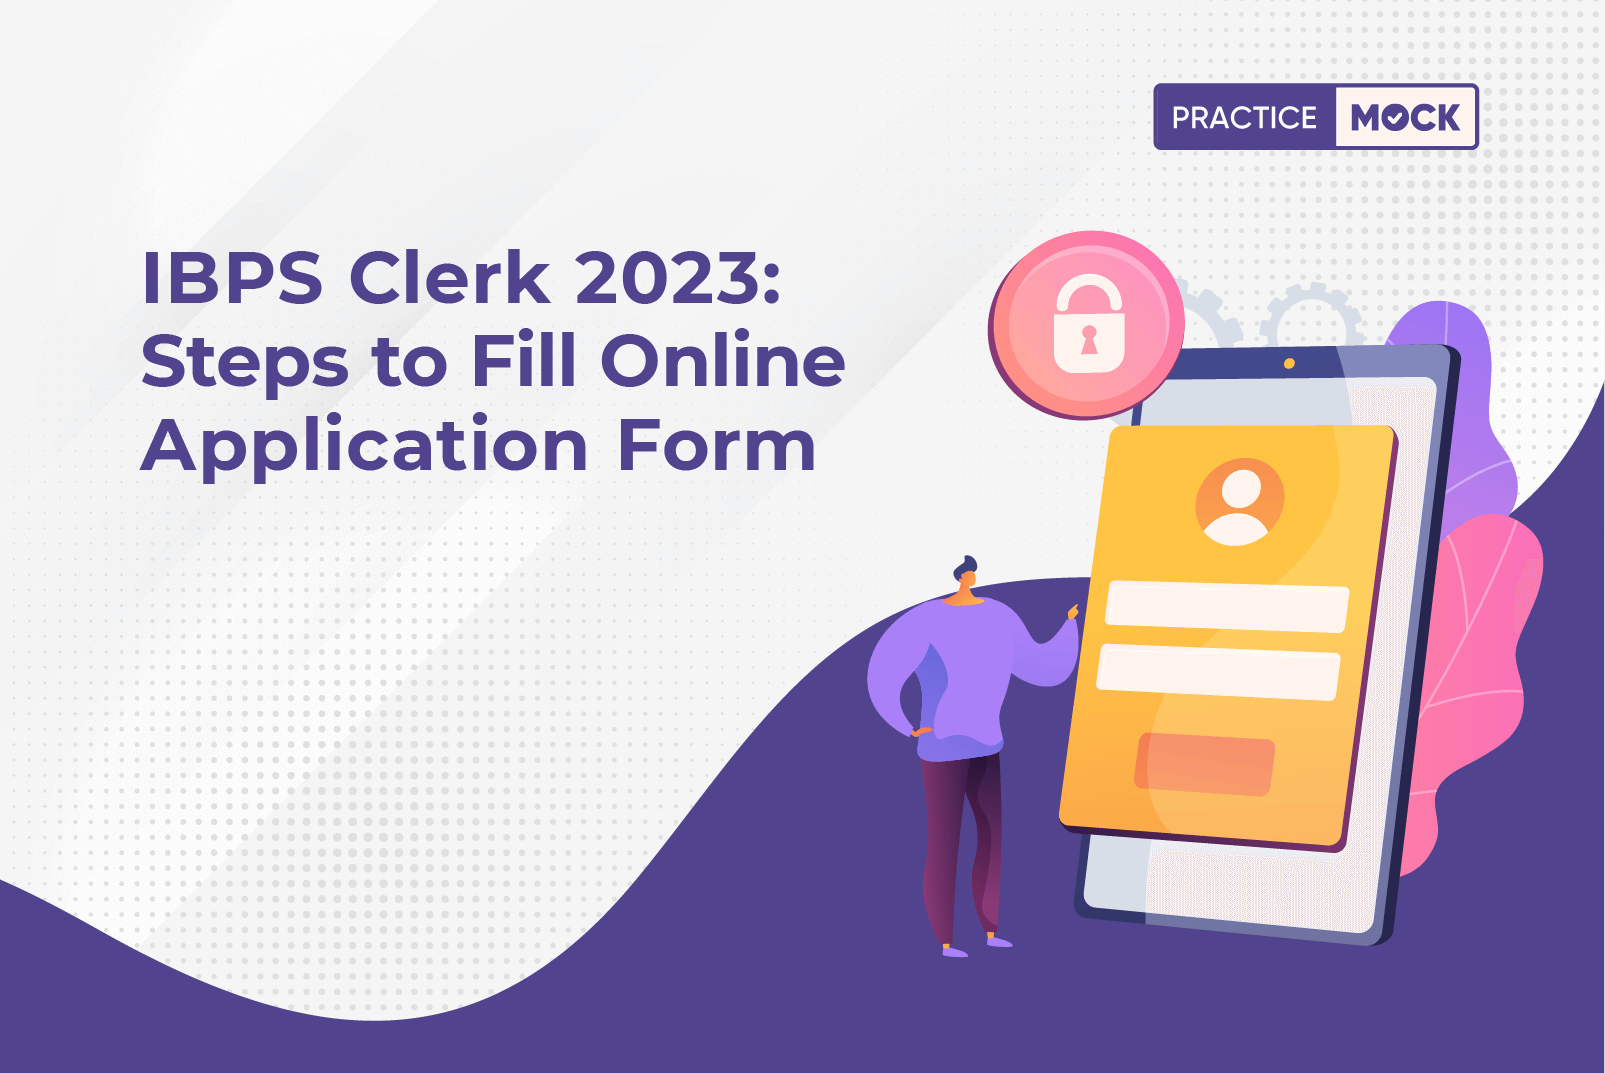 IBPS Clerk 2023 Steps to Fill Online Application Form PracticeMock